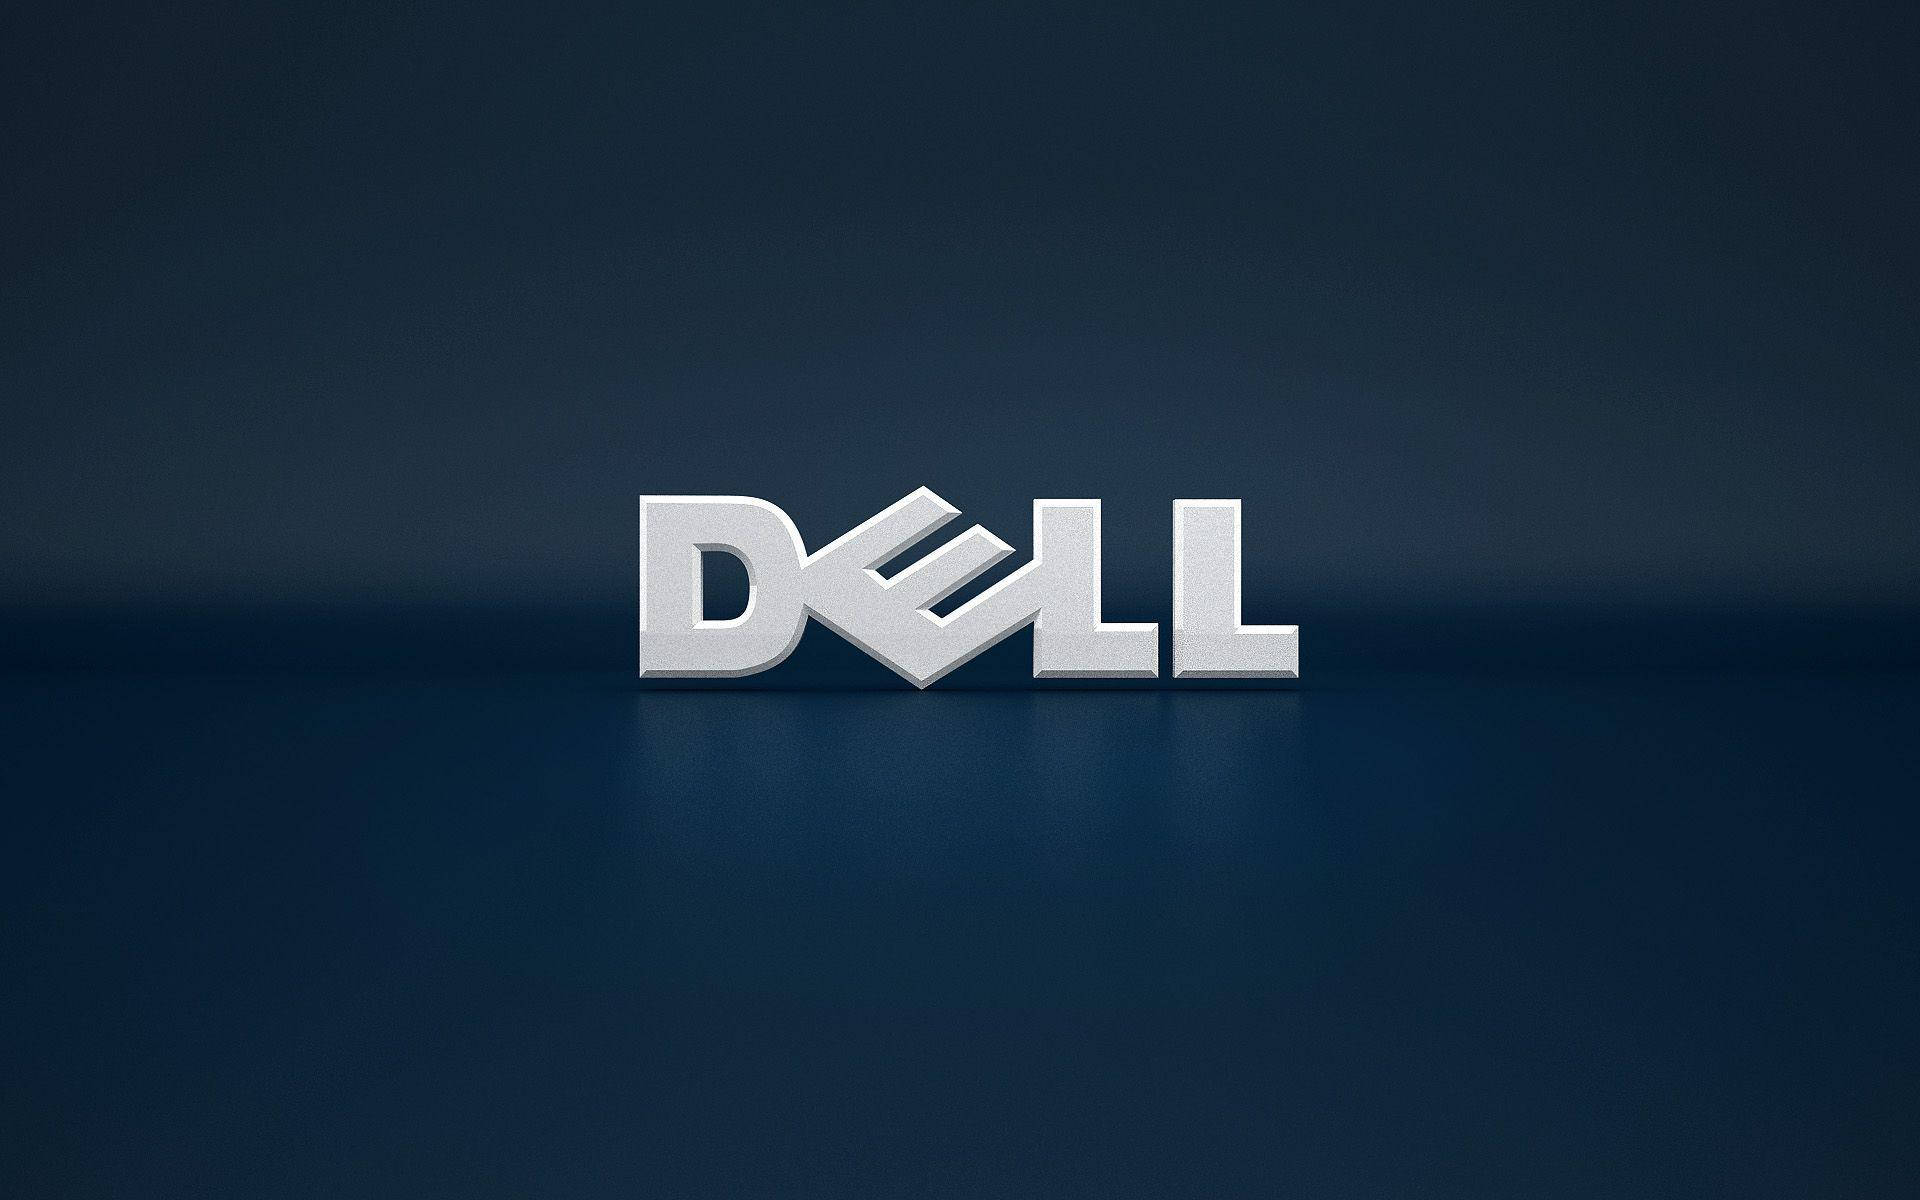 Blue And White Dell Logo Wallpaper